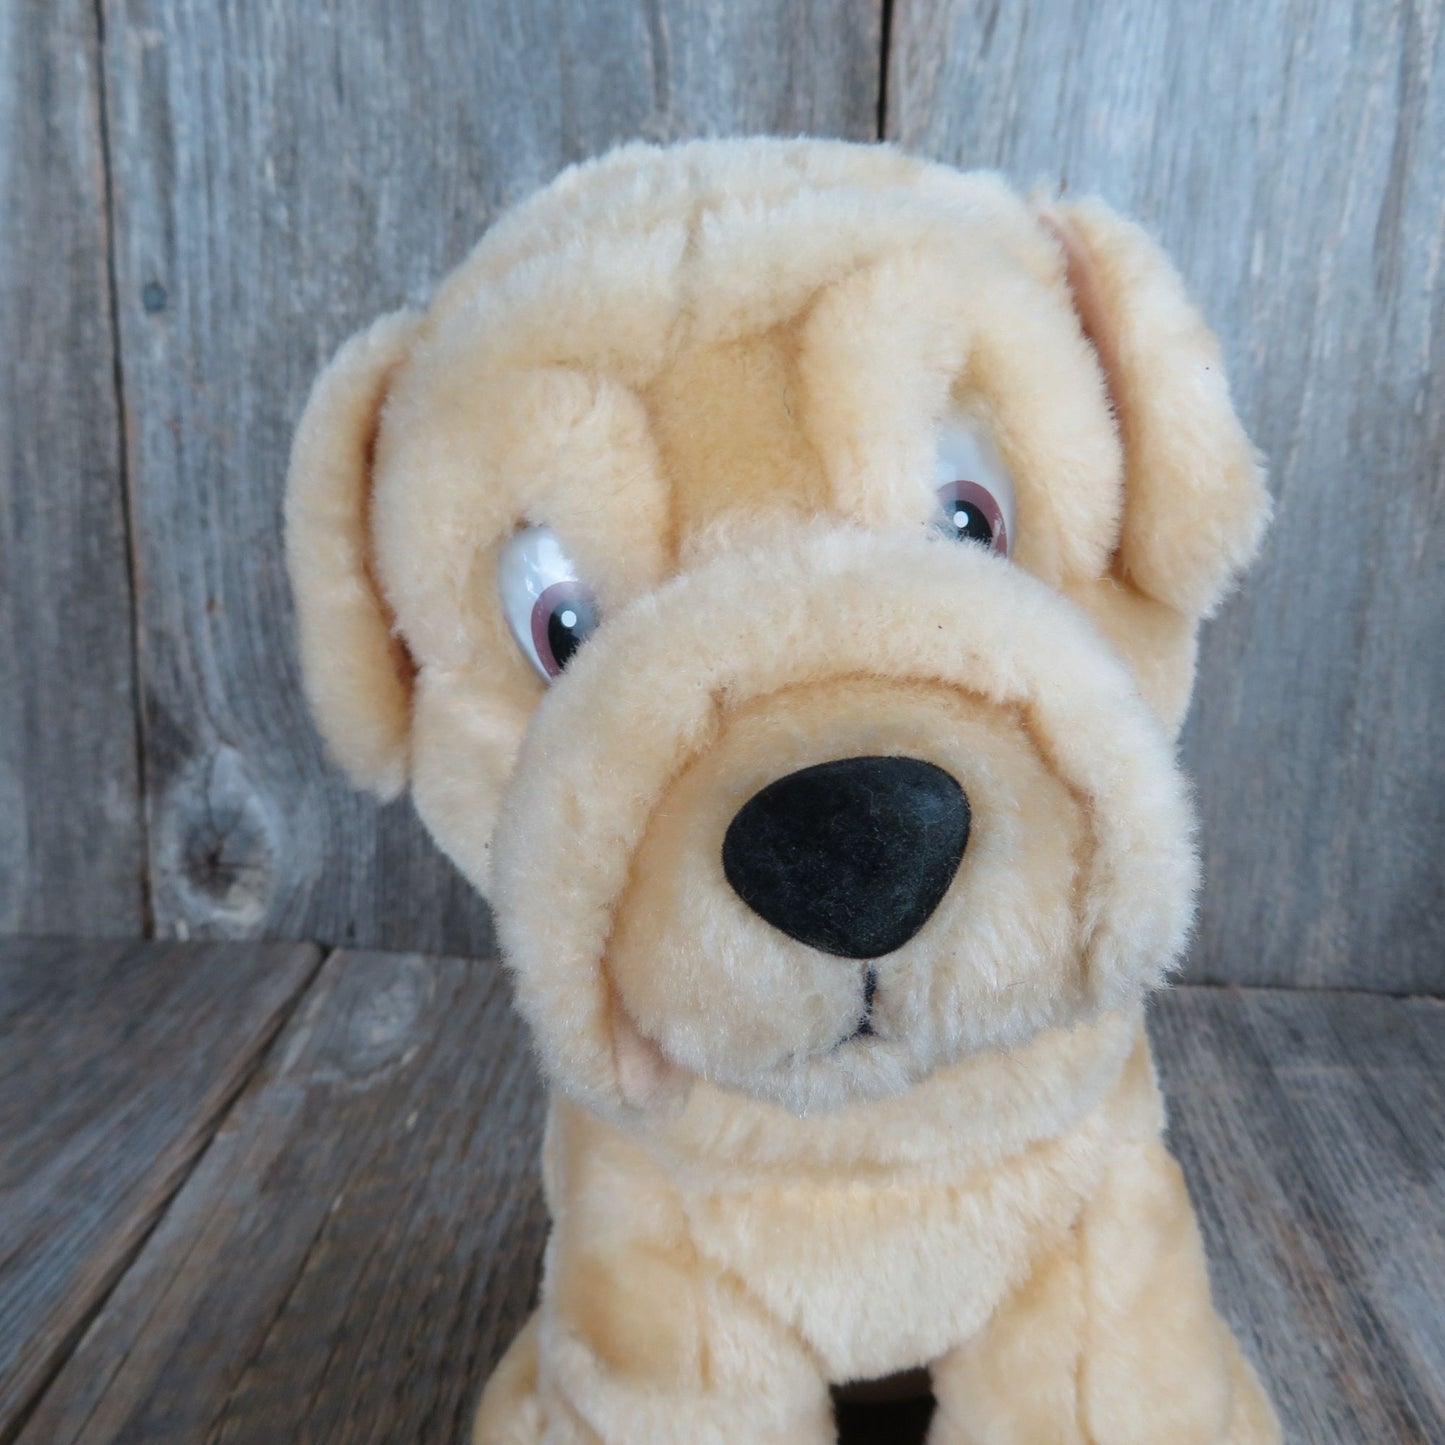 Wrinkled Dog Plush Shar Pei Bulldog Puppy Brown Vintage Stuffed Animal Classic Toy Company